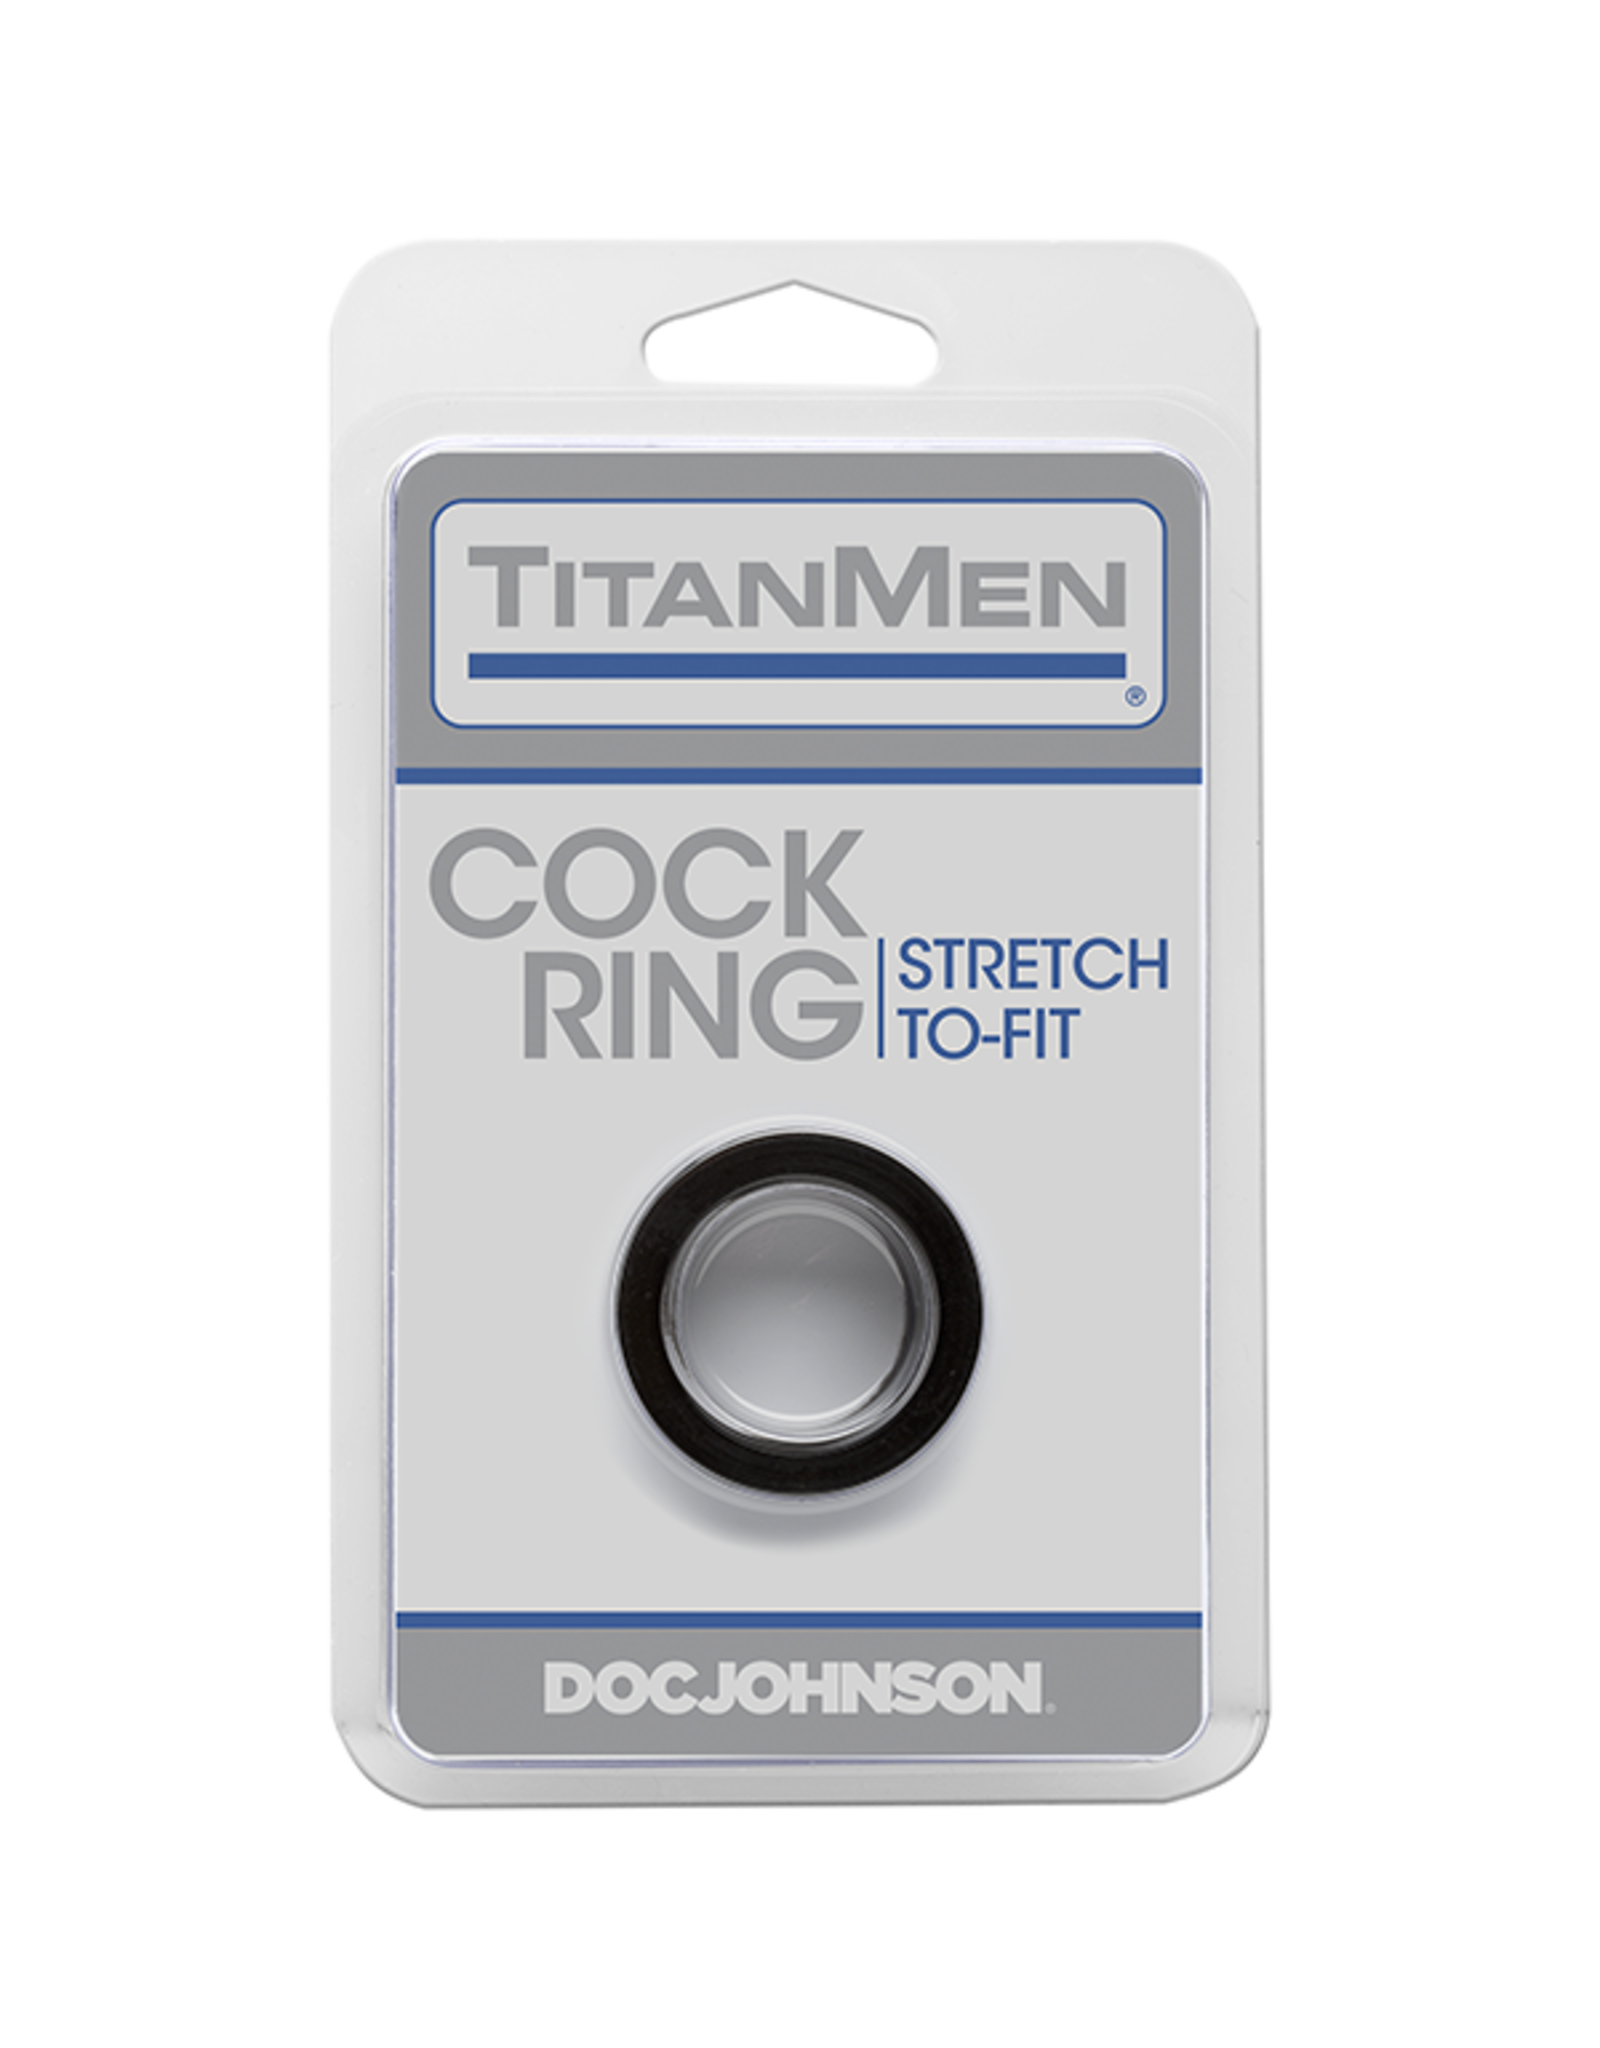 TitanMen TitanMen Cock Ring Stretch to Fit